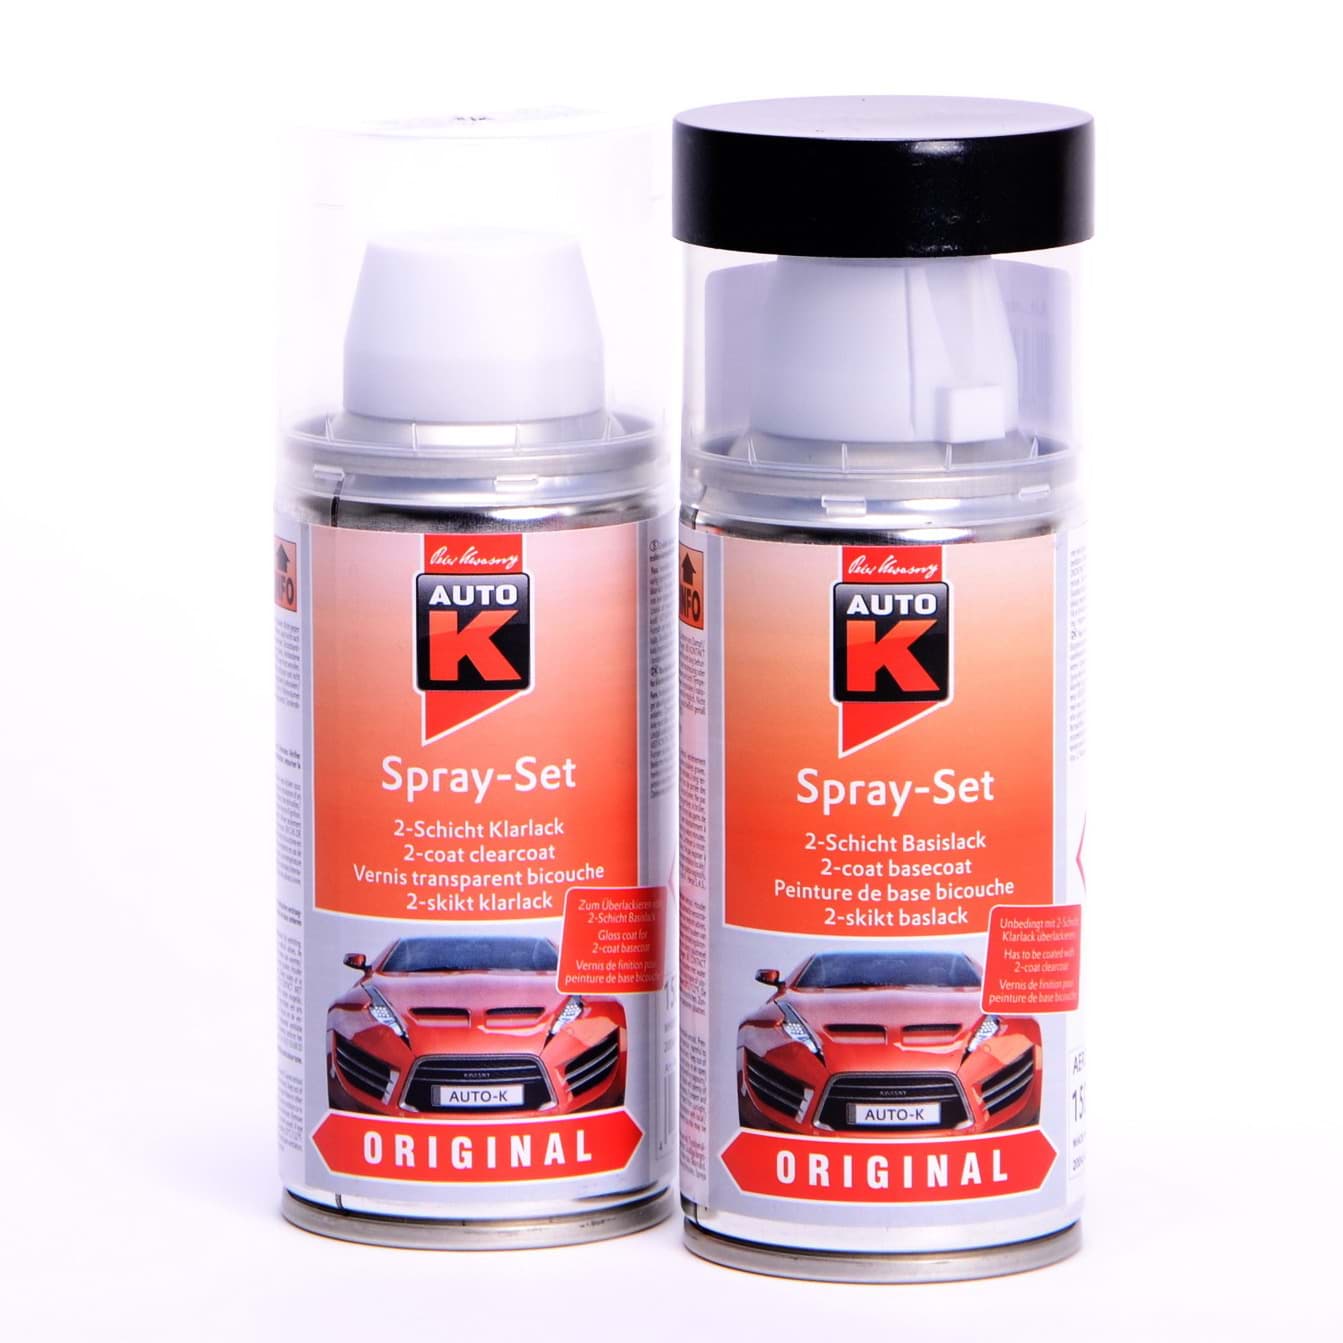 Auto-K Spray-Set Autolack für Opel 290 Nordkap met 21424 resmi